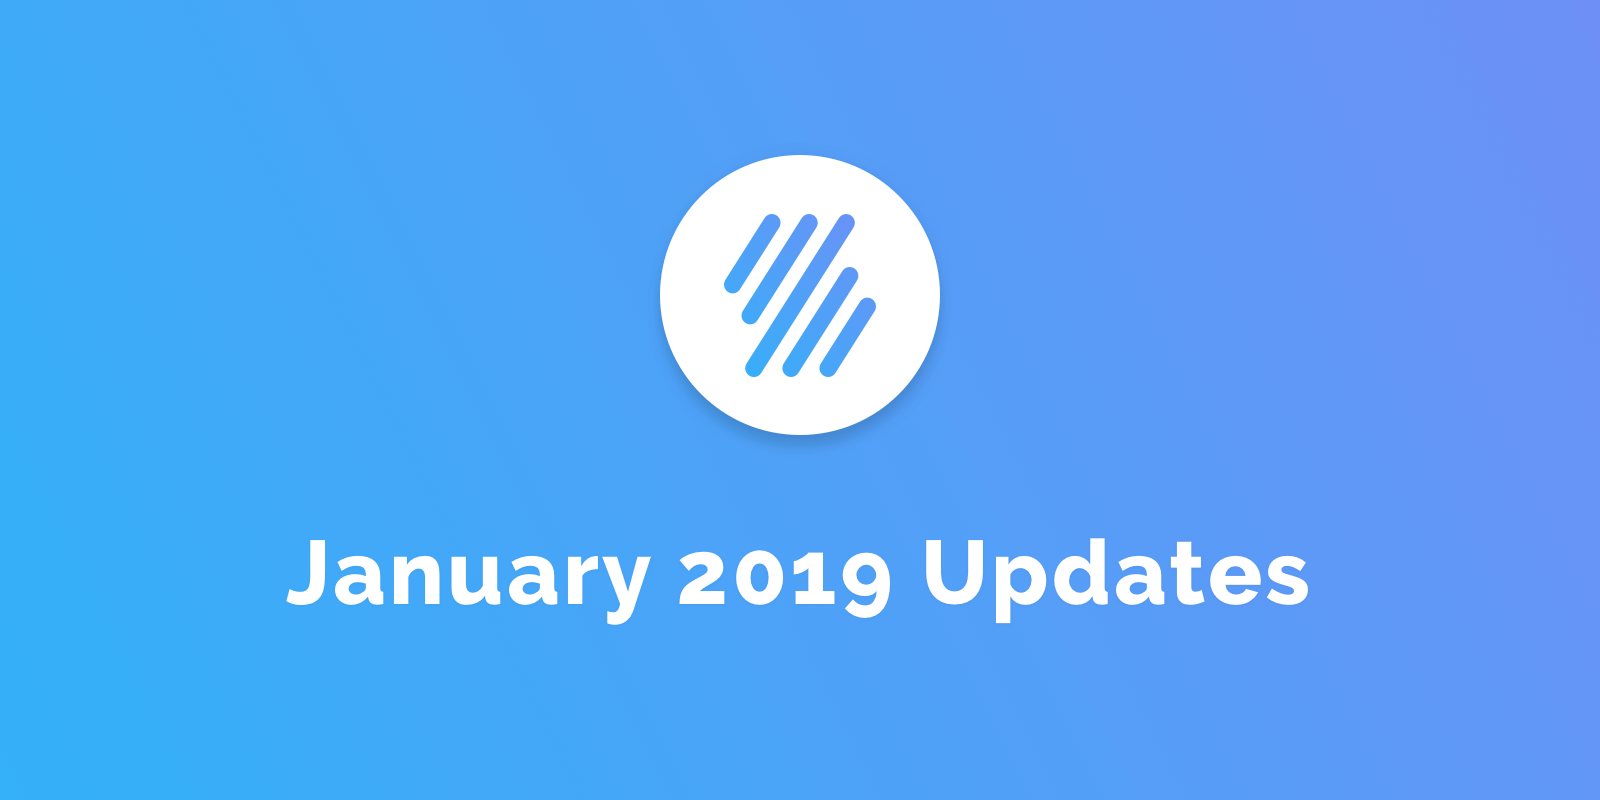 January 2019 Updates